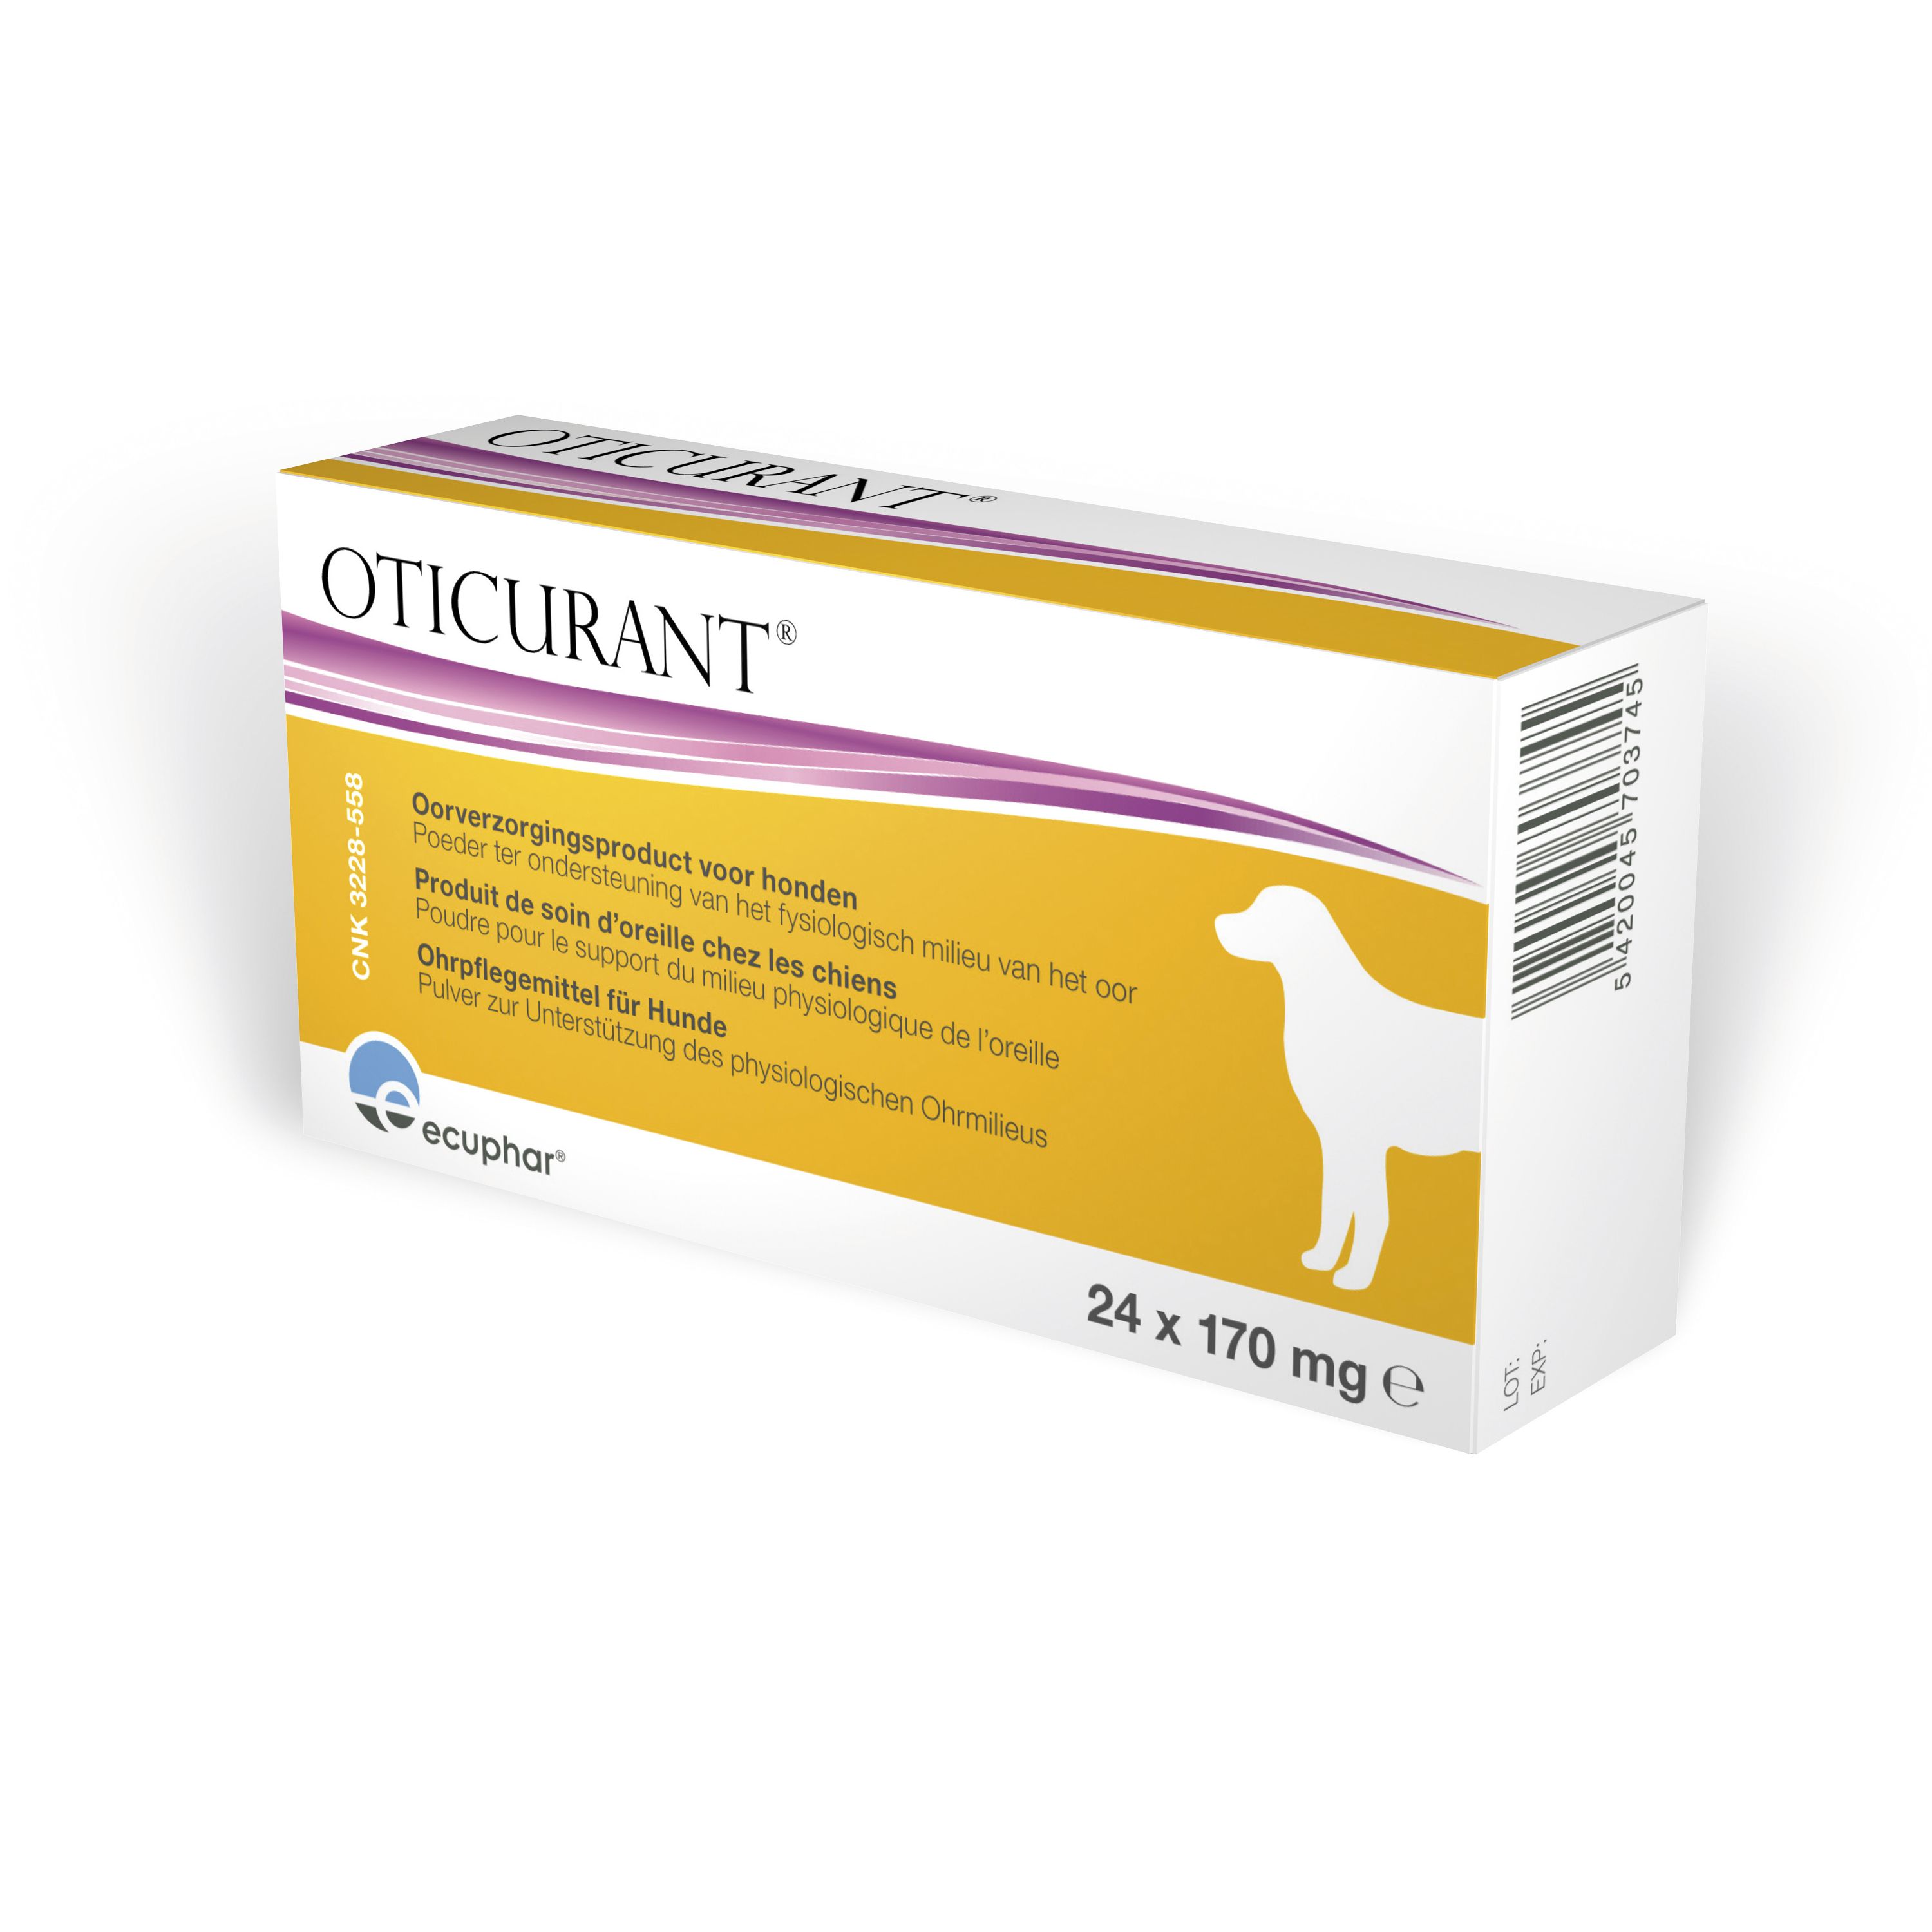 ecuphar Oticurant 24 x 170 mg Sachets